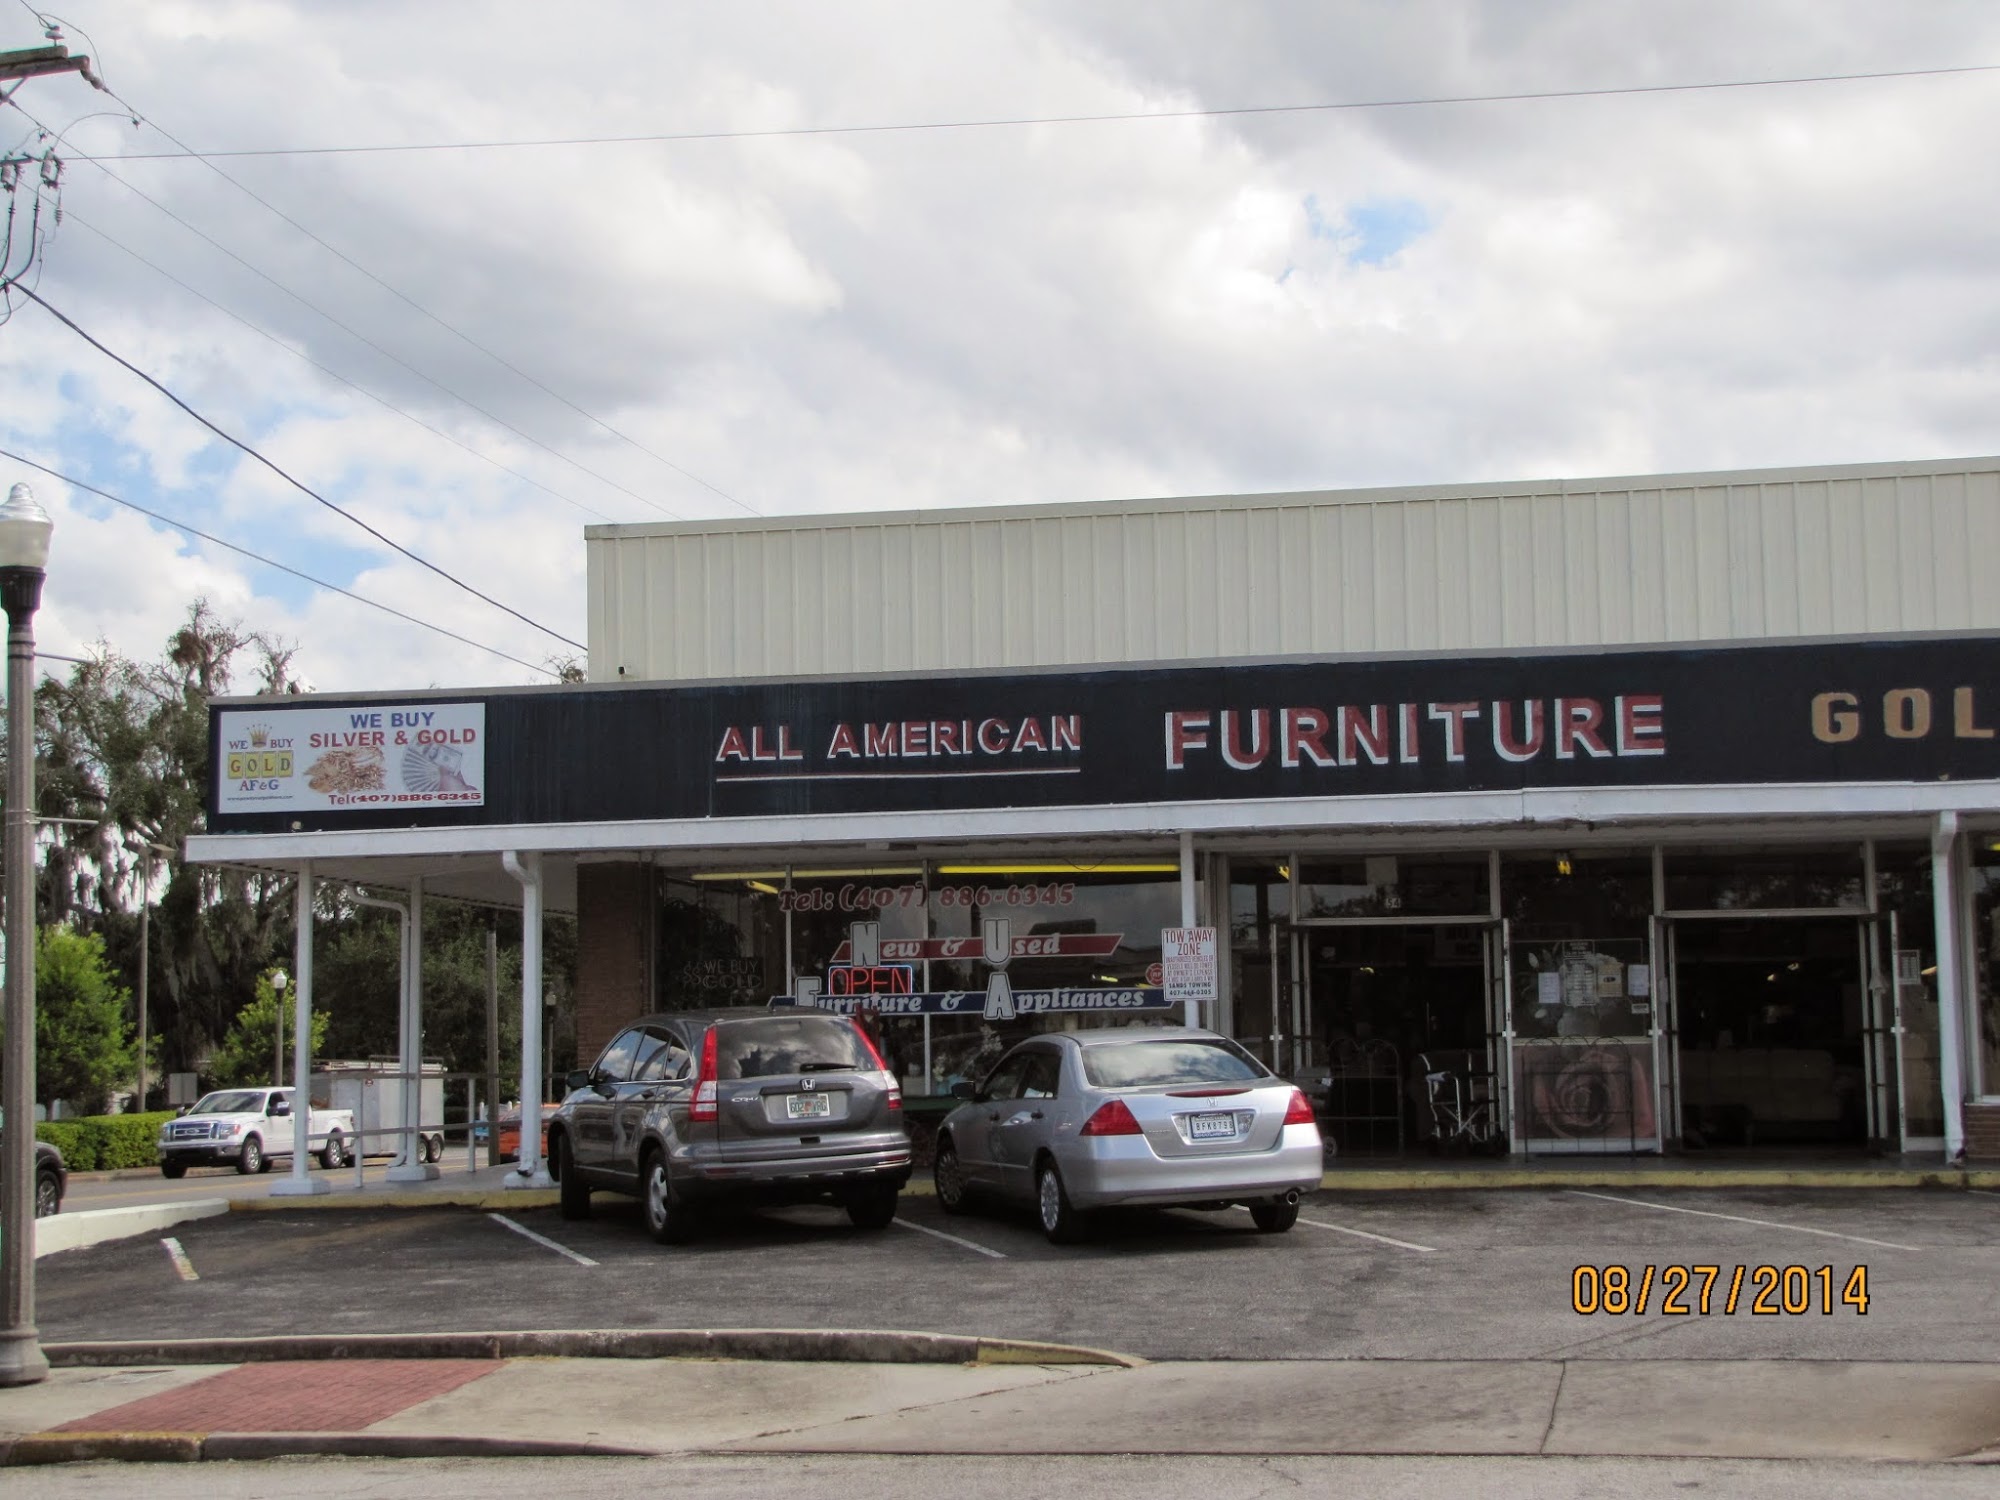 All American Furniture